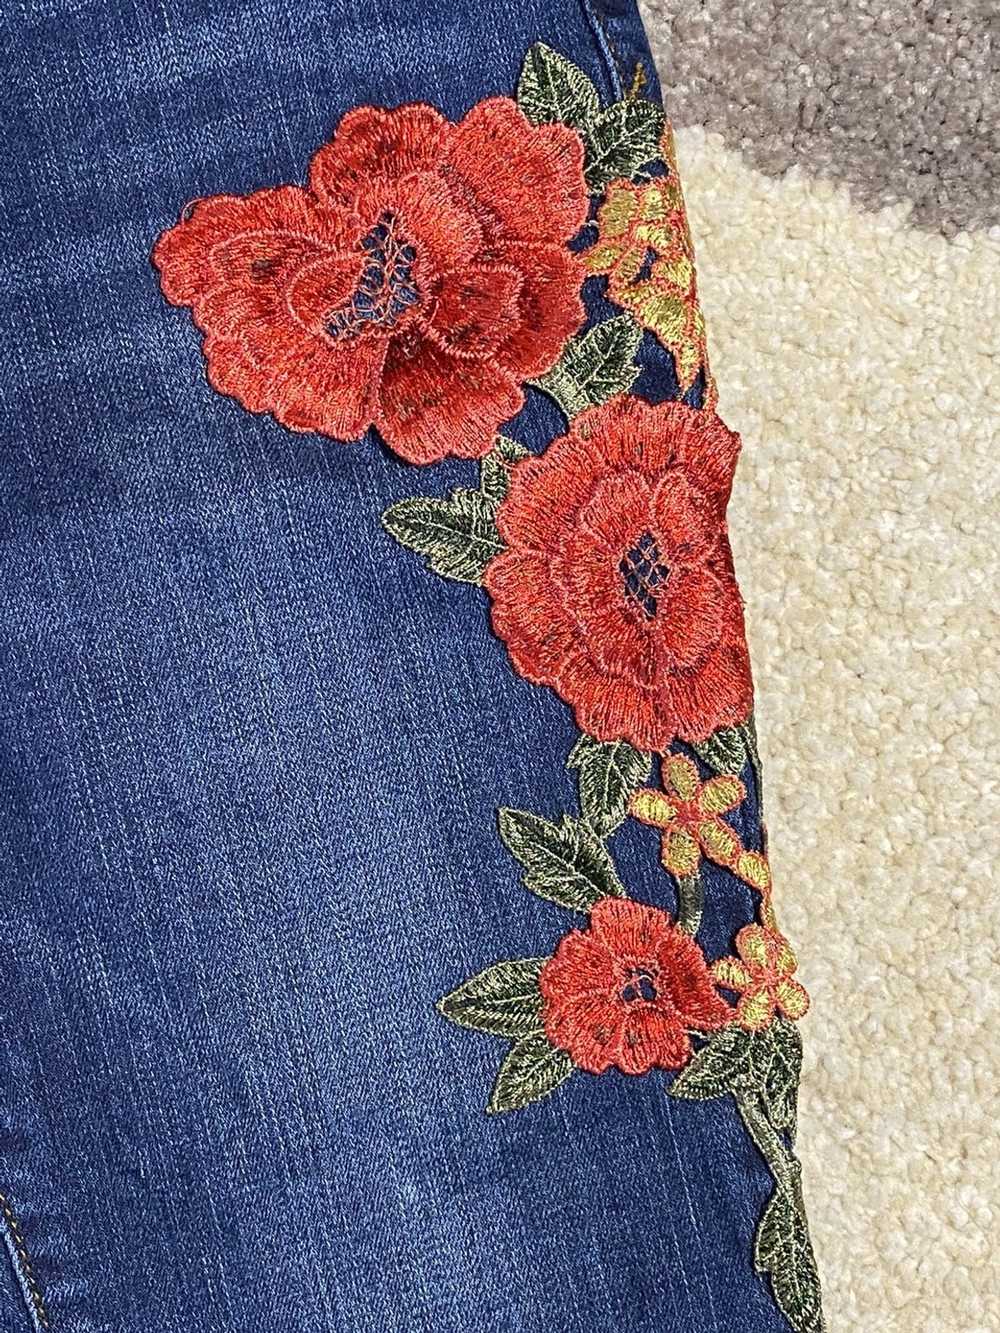 Streetwear Floral jeans size 25 - image 2